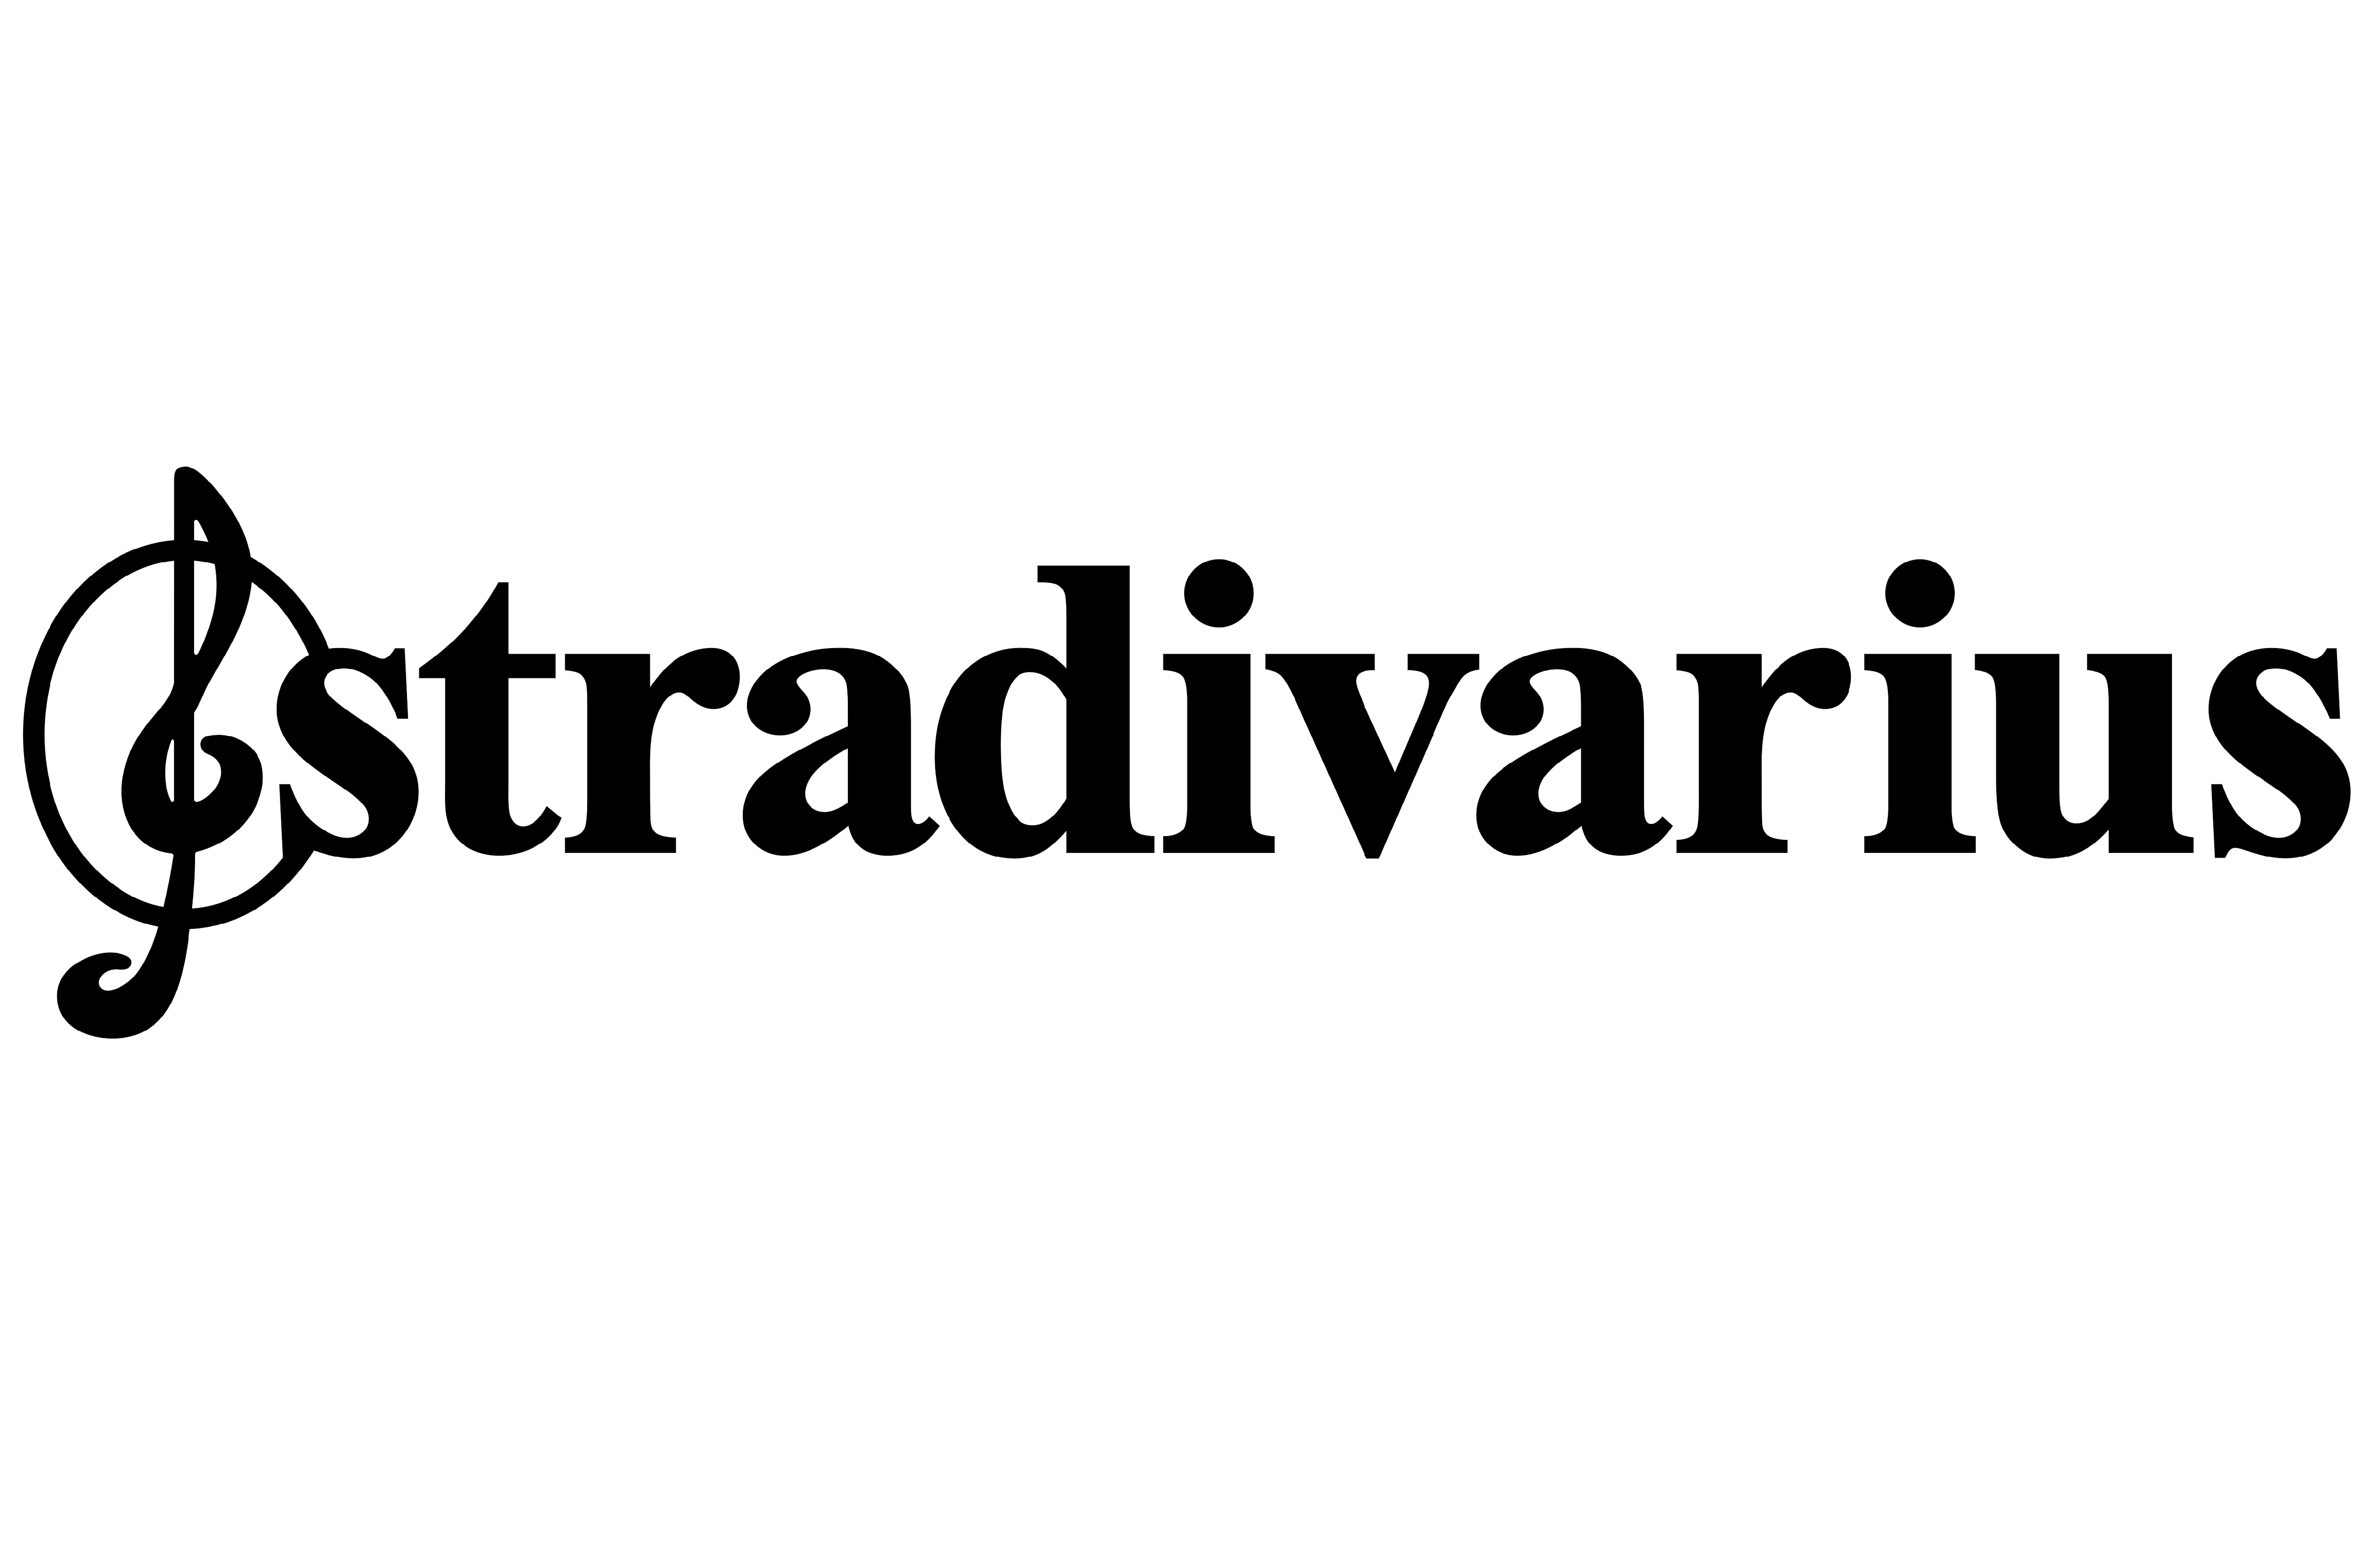 Stradivarius Coupons